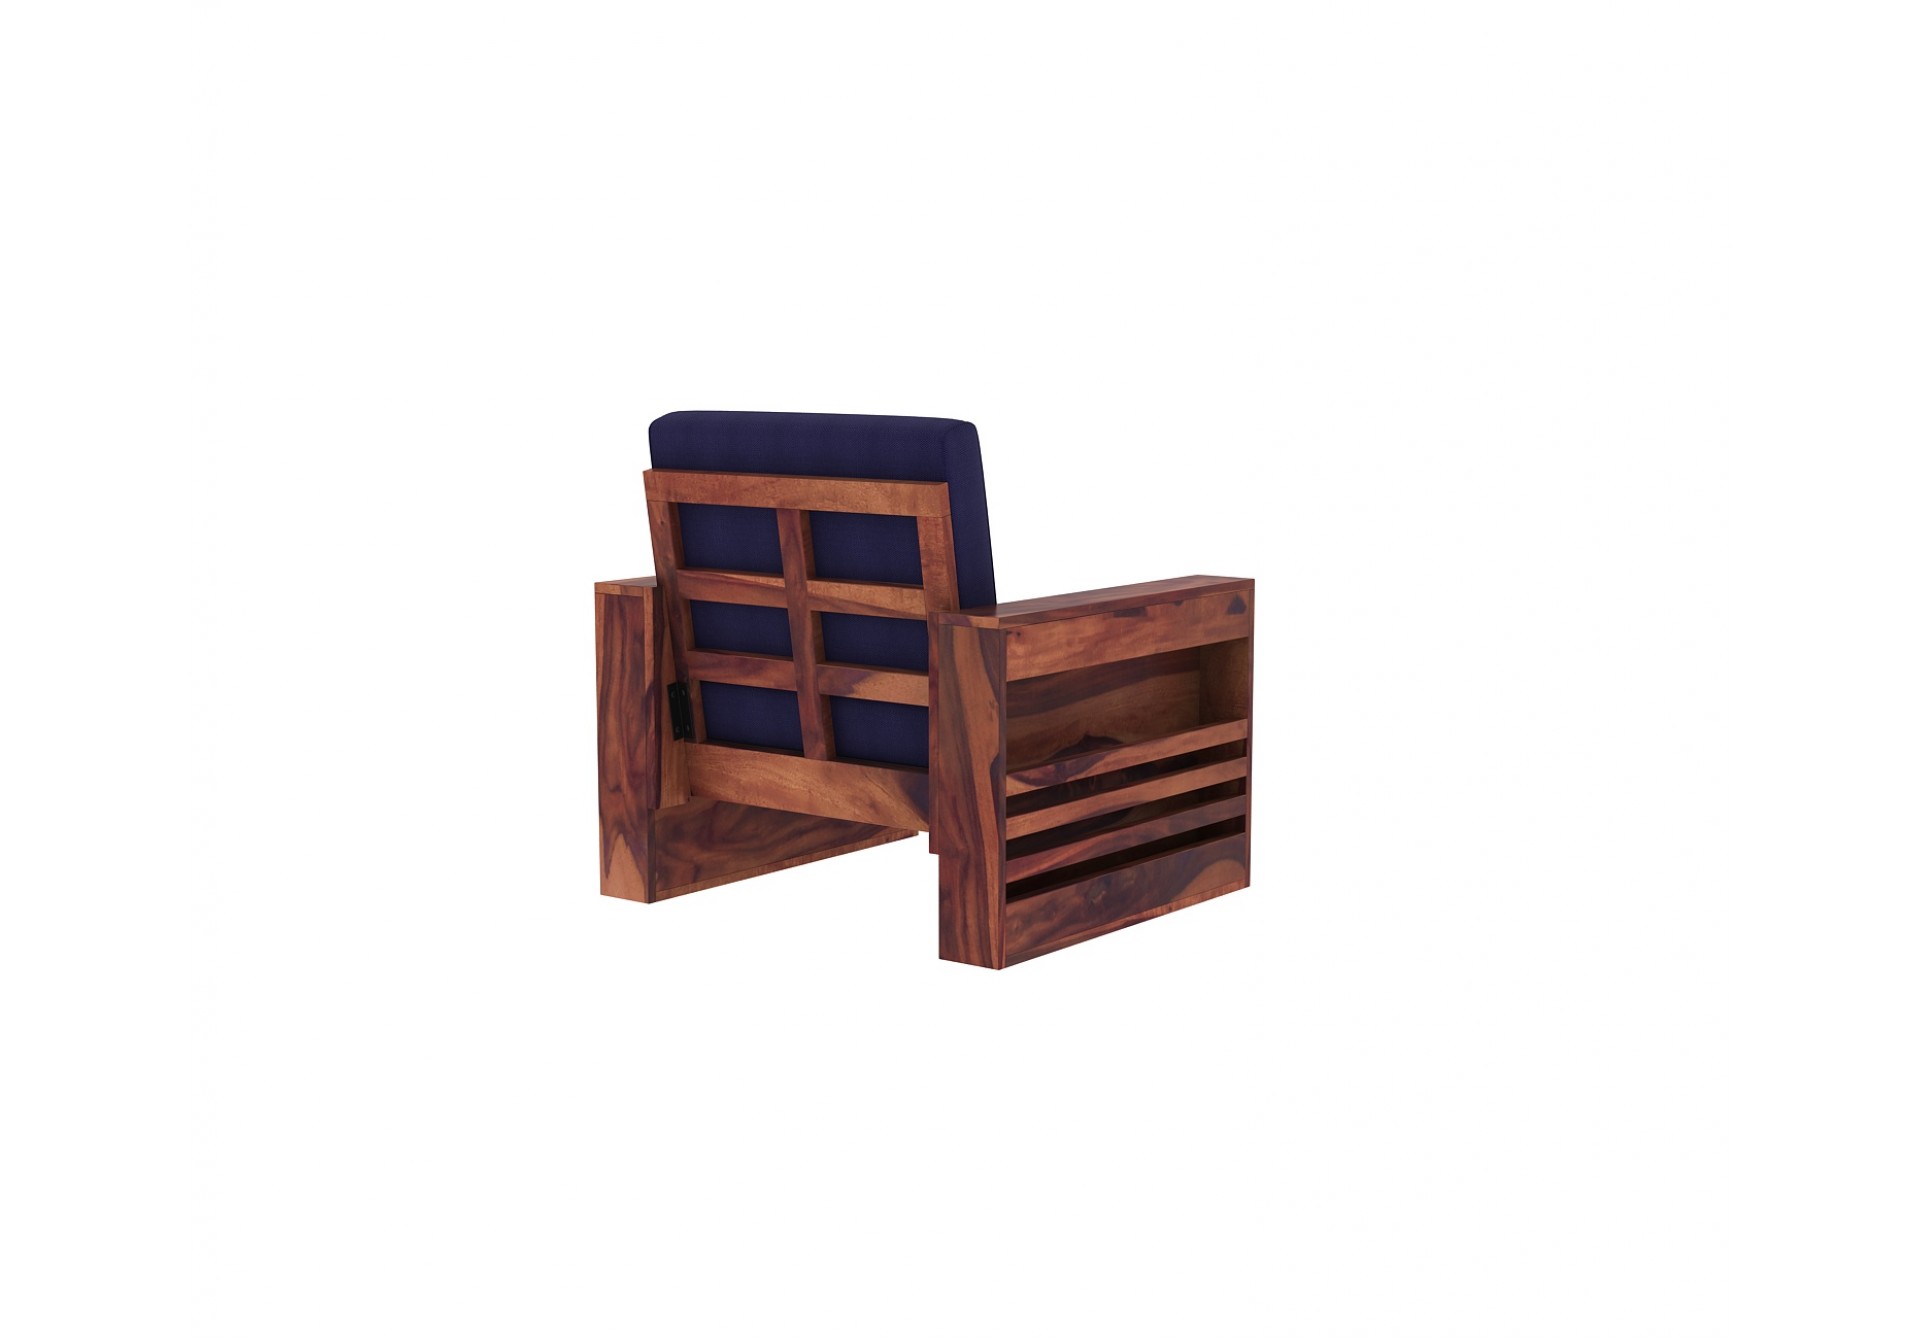 Modeway Wooden Sofa 1 Seater 